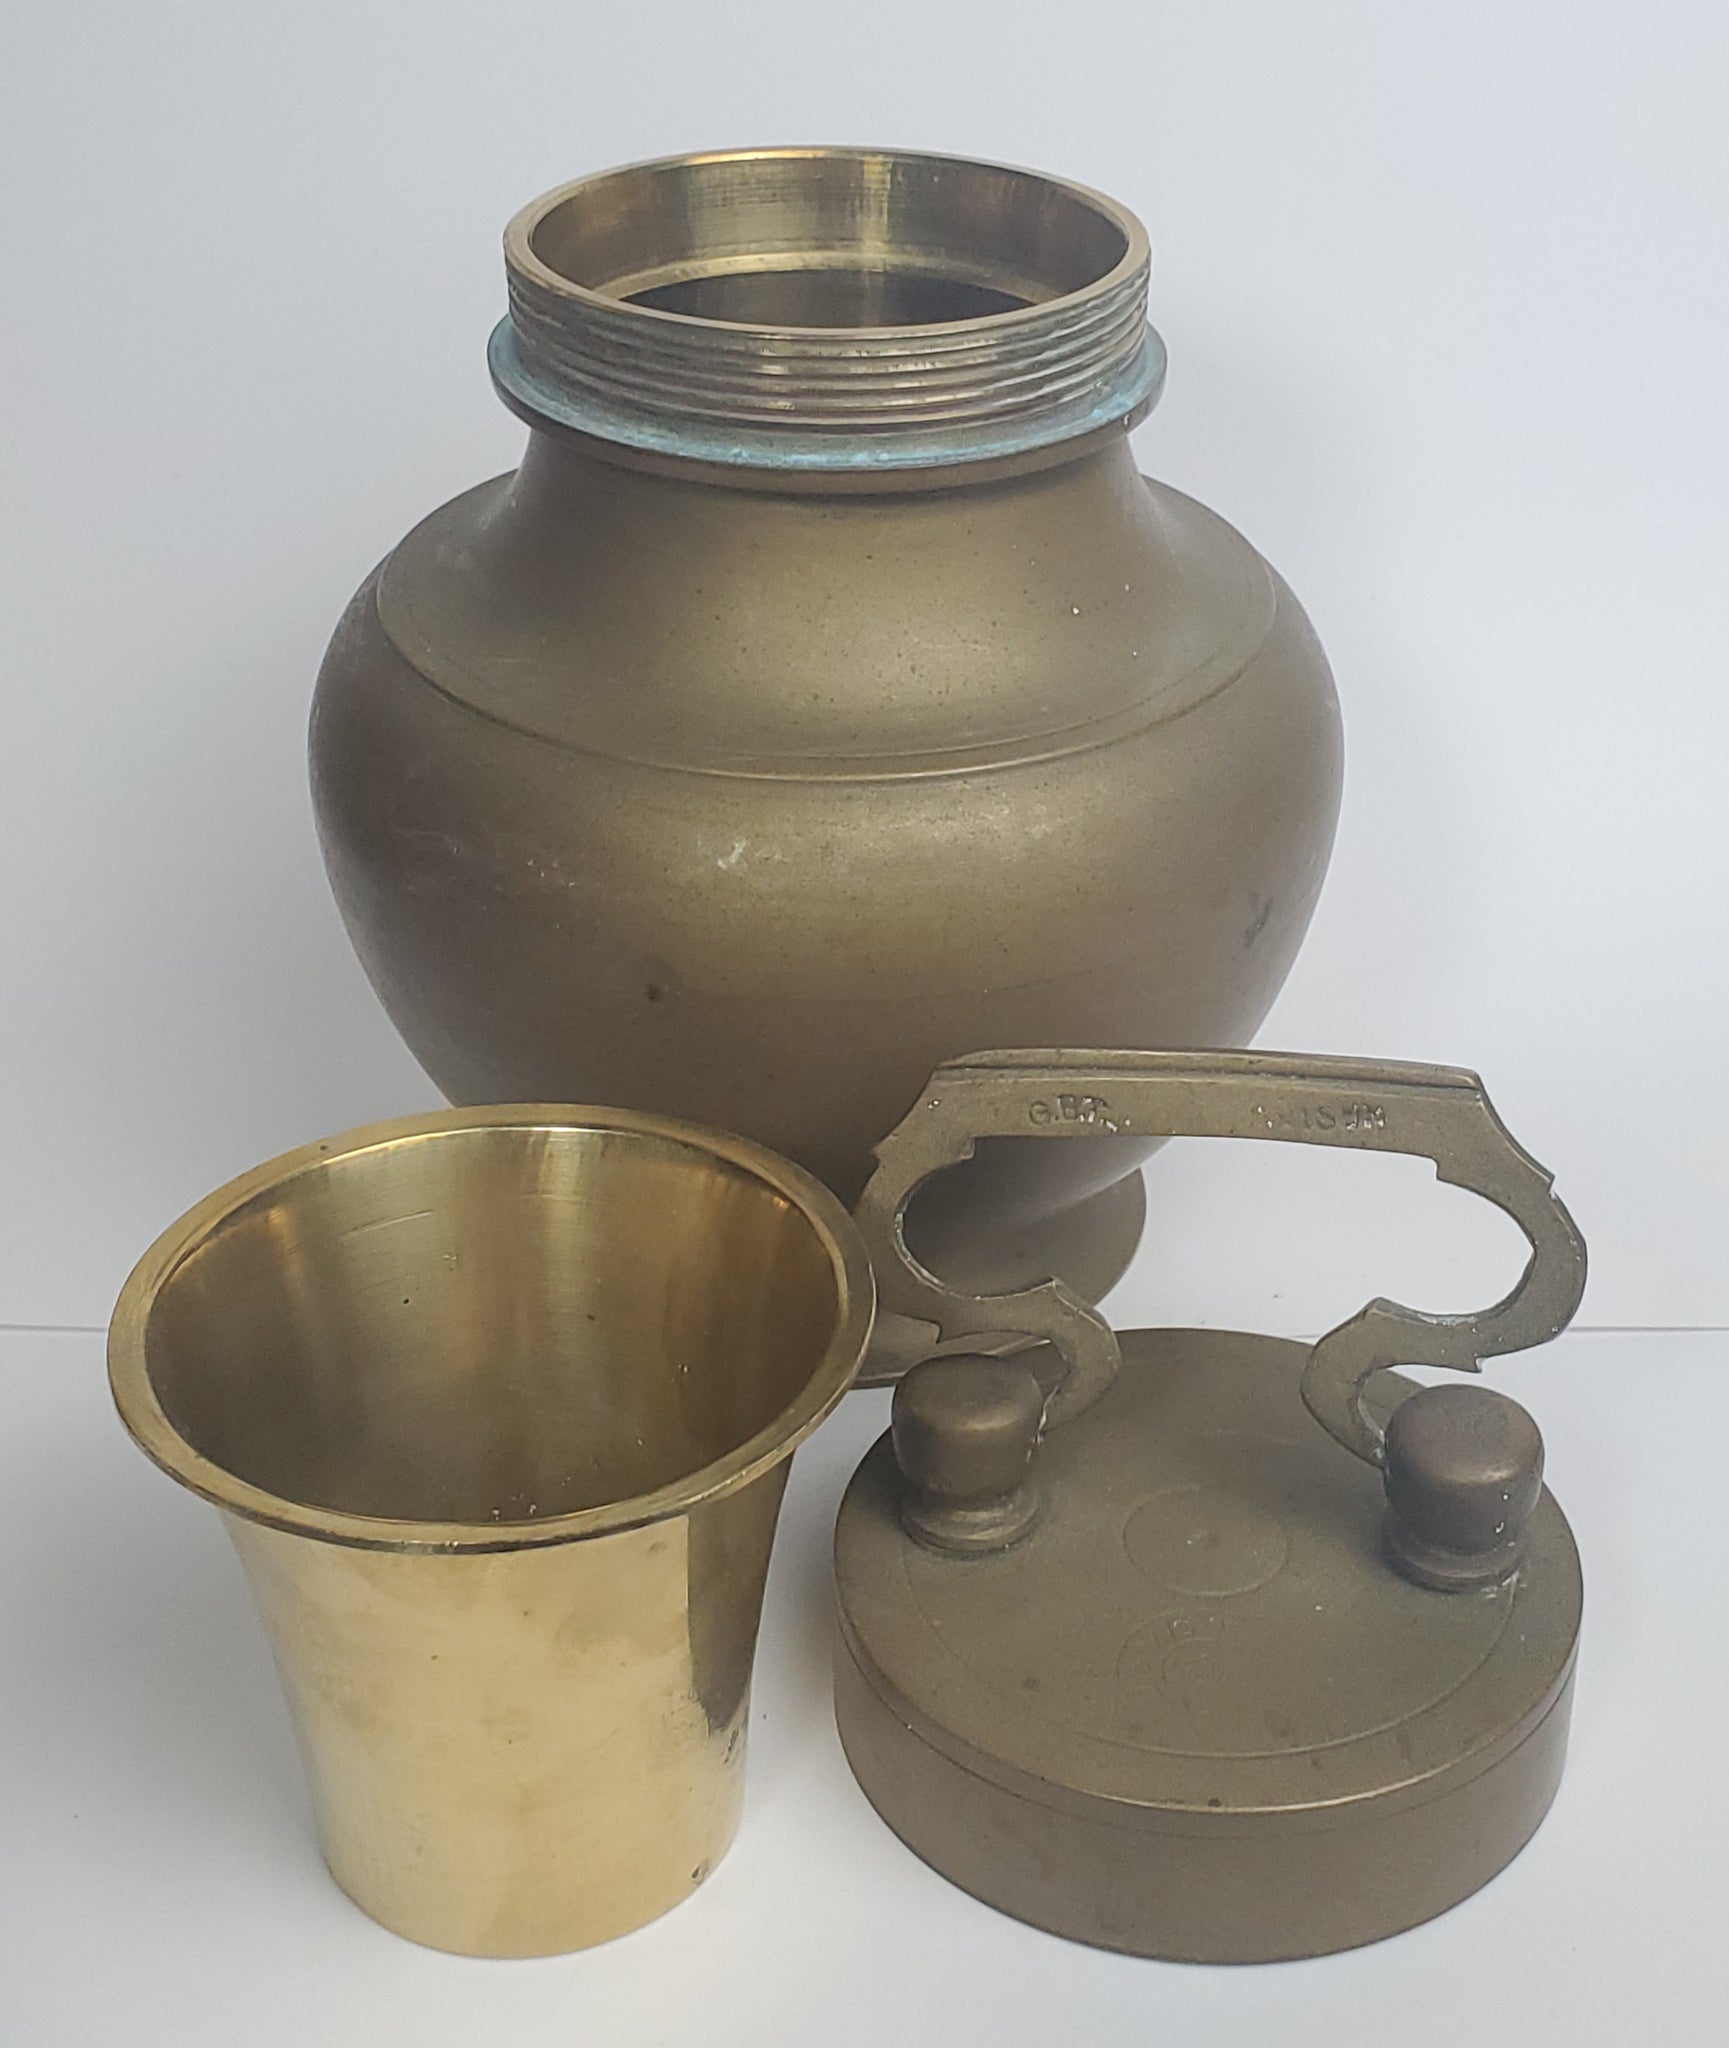 Vintage Indian Brass Water Jug w/ Built-in Brass Cup